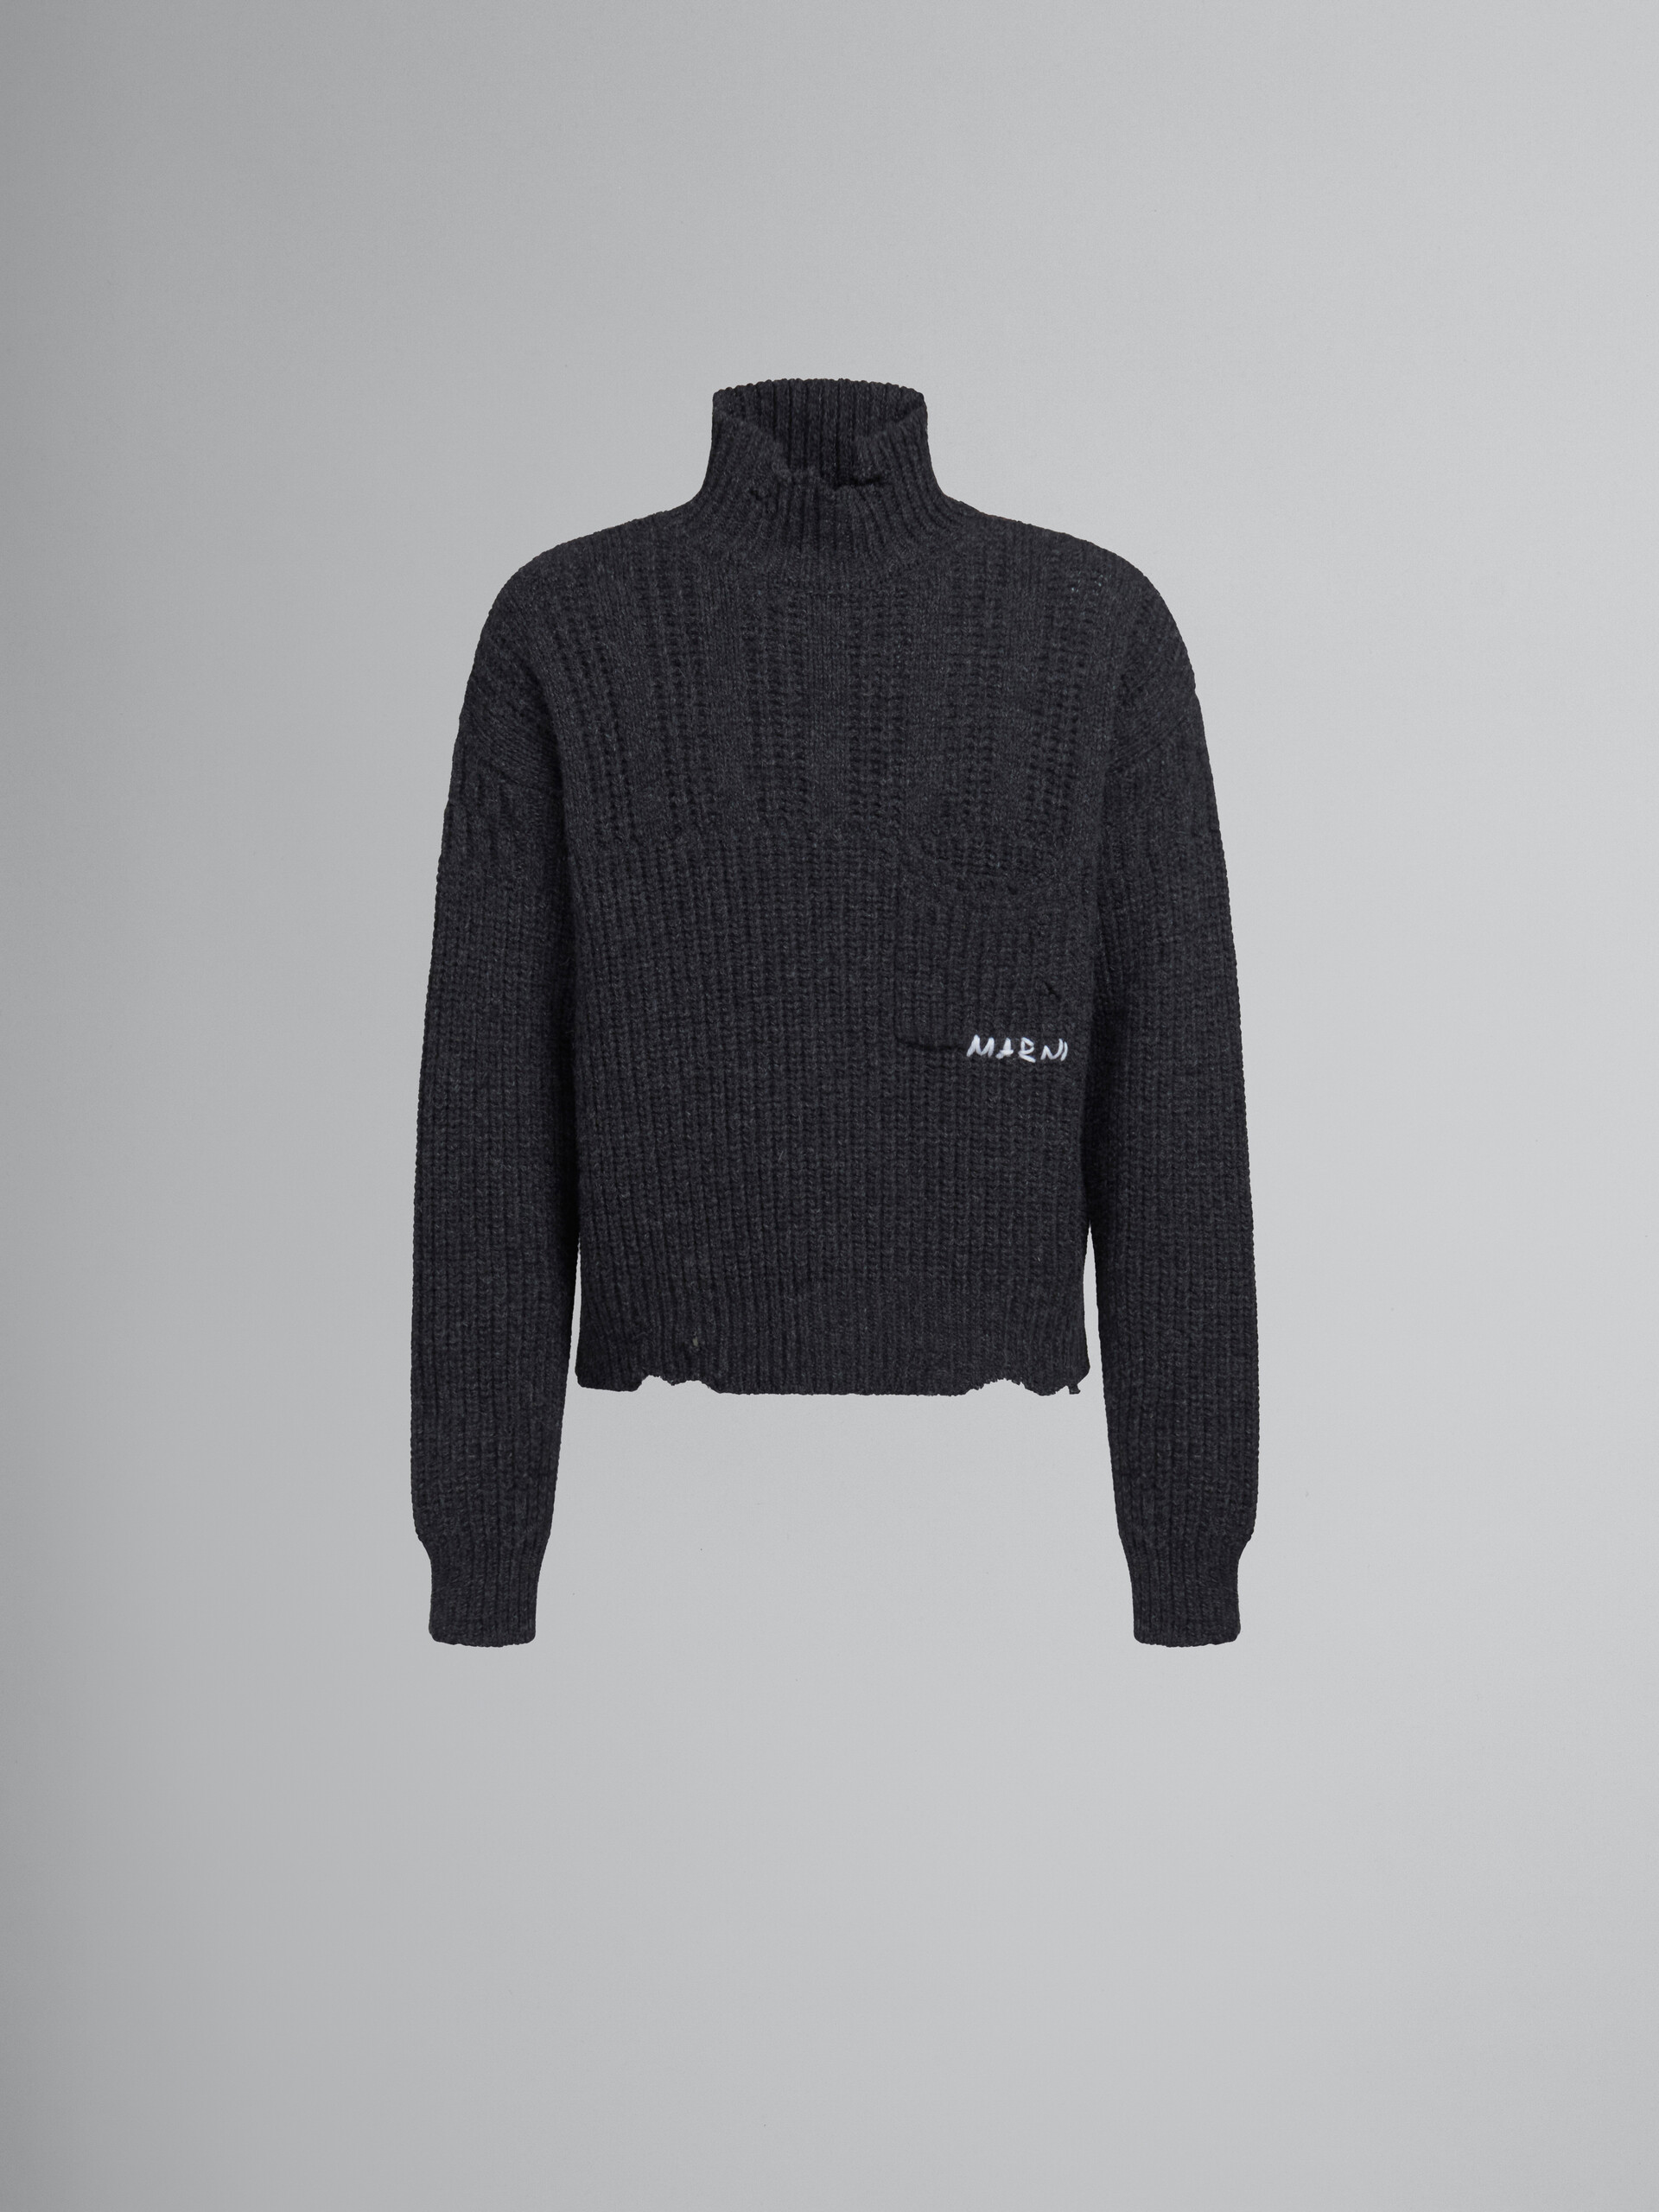 Grey virgin wool jumper with nibbled hem - Pullovers - Image 1